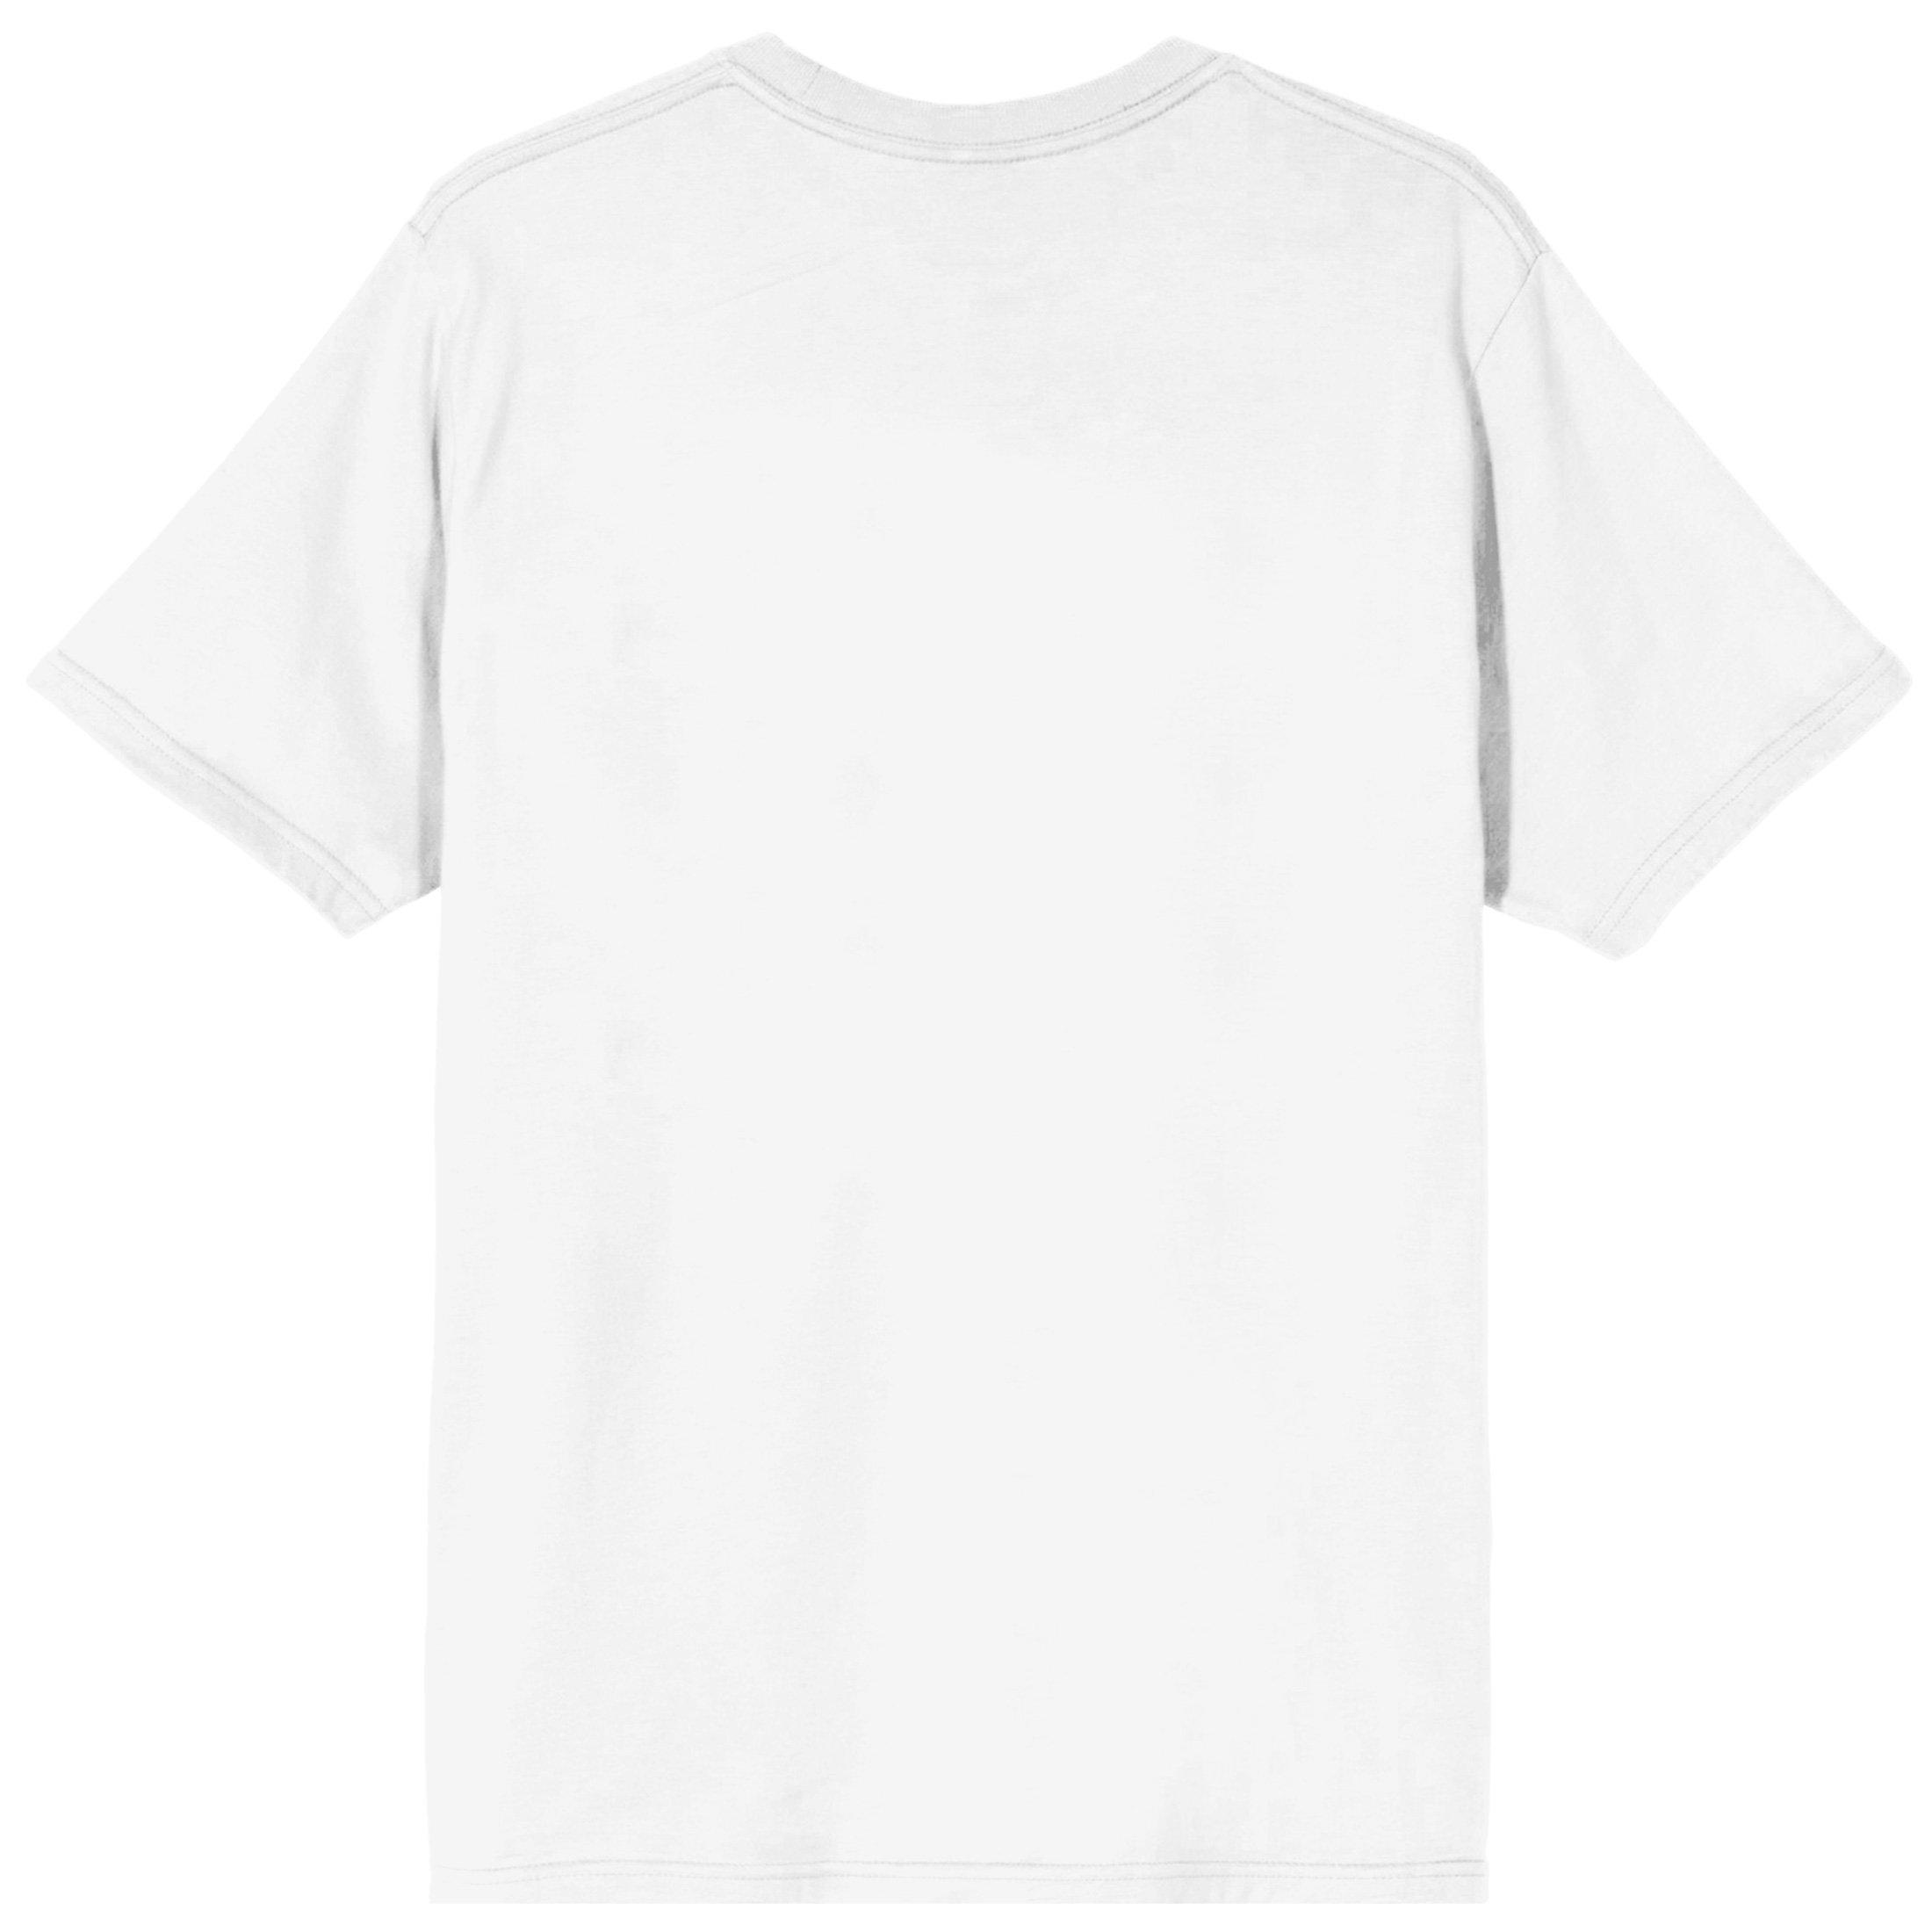 Dragon Ball Z Kanji Characters Men's White Short Sleeve T-Shirt